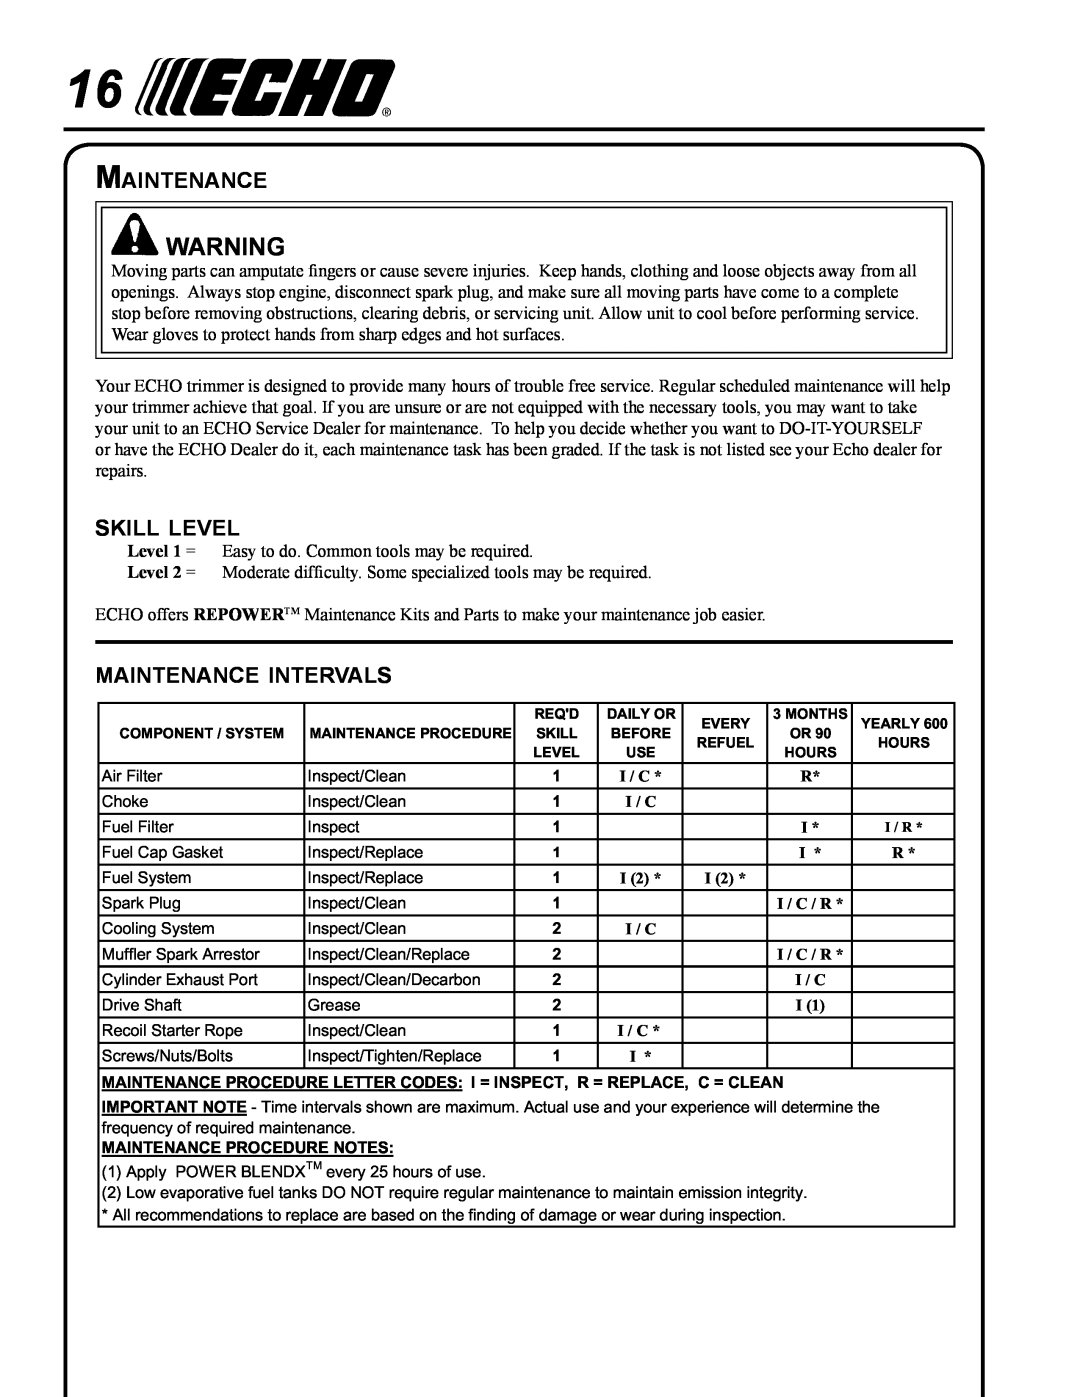 Echo PAS-265 manual Maintenance, skill level, maintenance intervals 